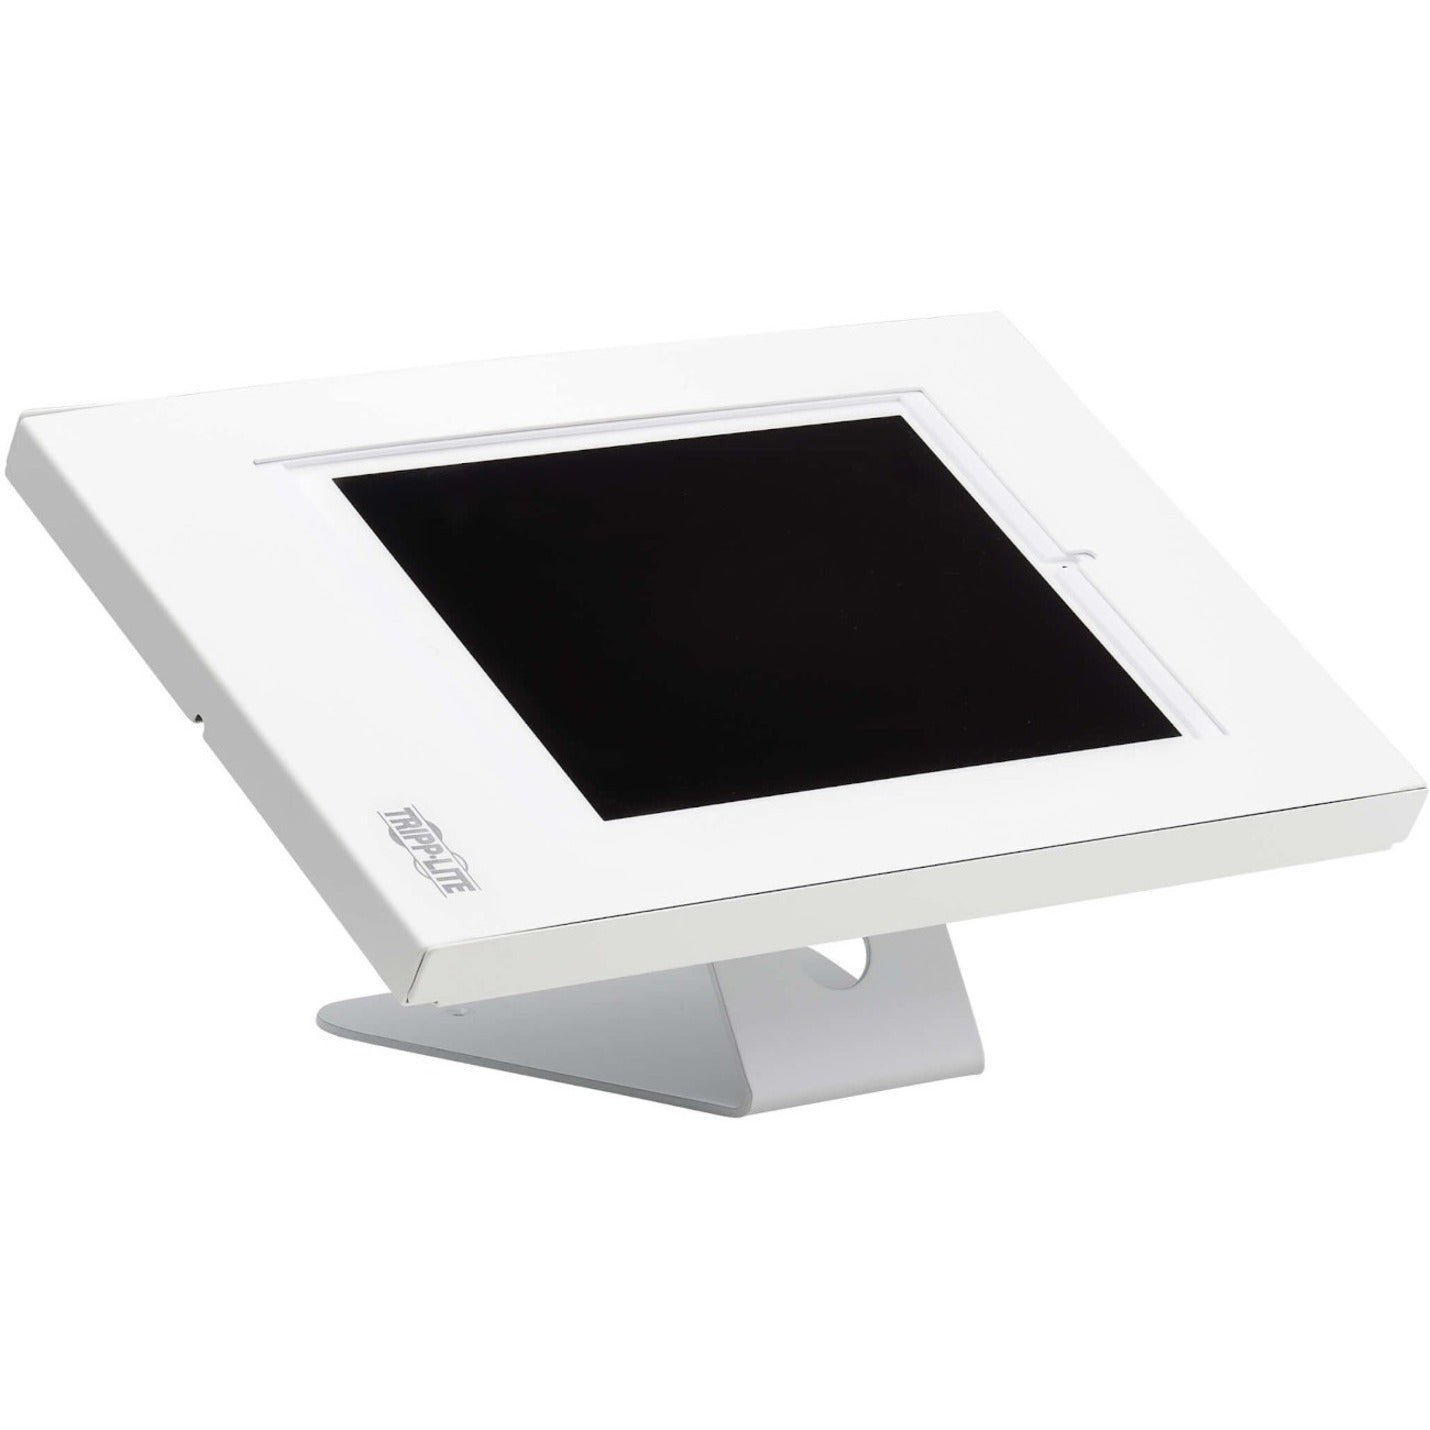 Tripp Lite DMTB911 Secure Mount Tablet 9.7-11 in. White, Low Profile, Landscape/Portrait Mounting, Key Lock, Anti-theft